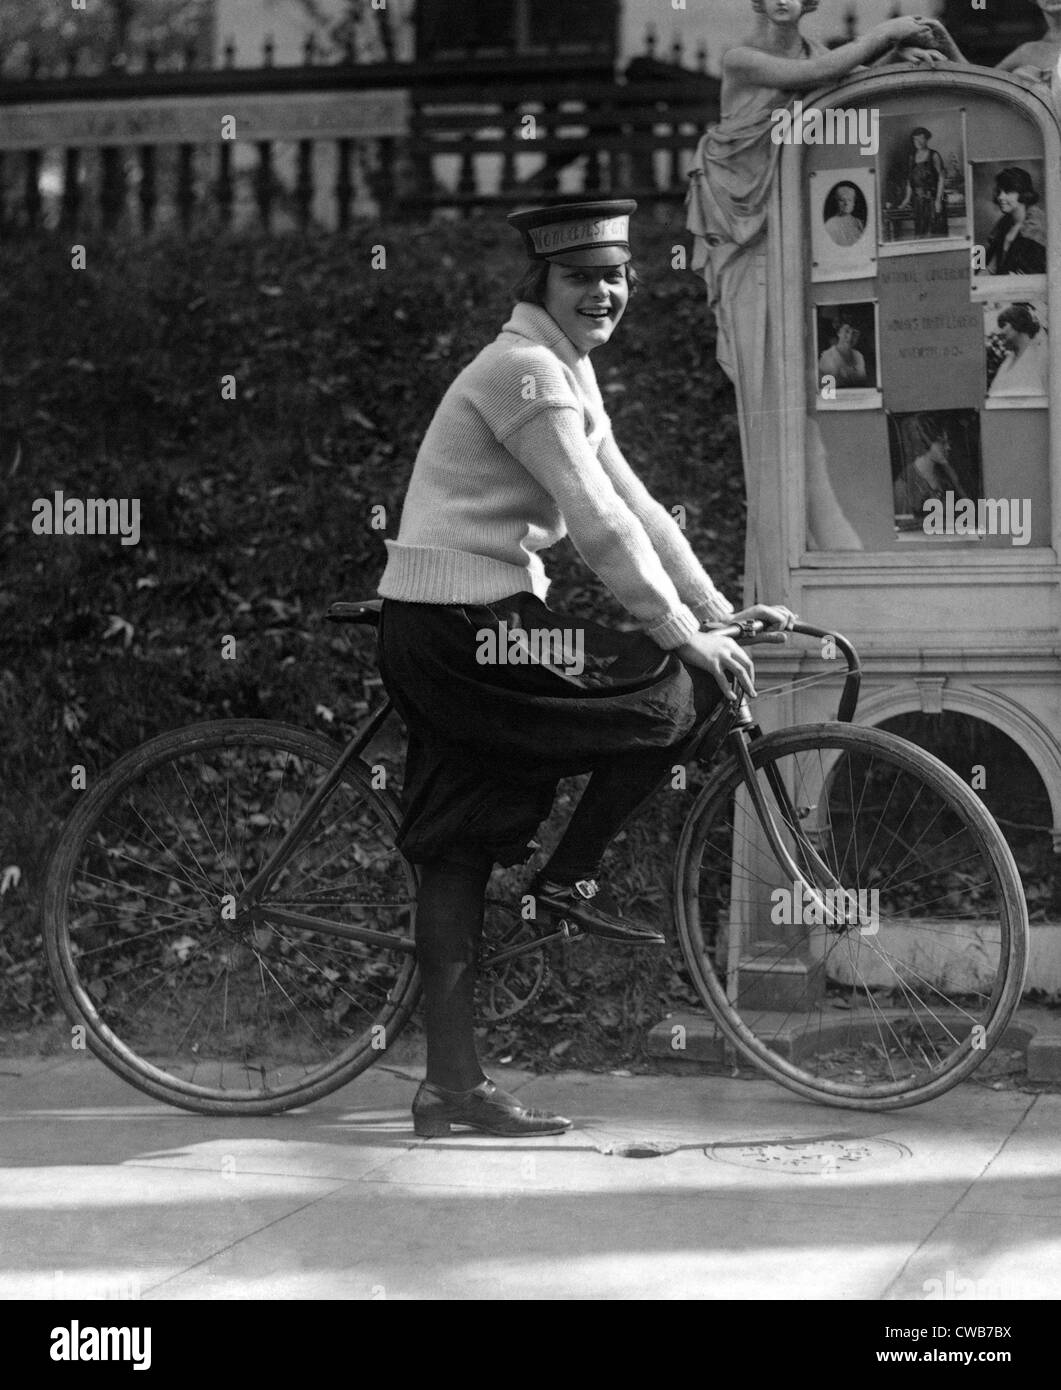 Bike messenger Black and White Stock Photos & Images - Alamy